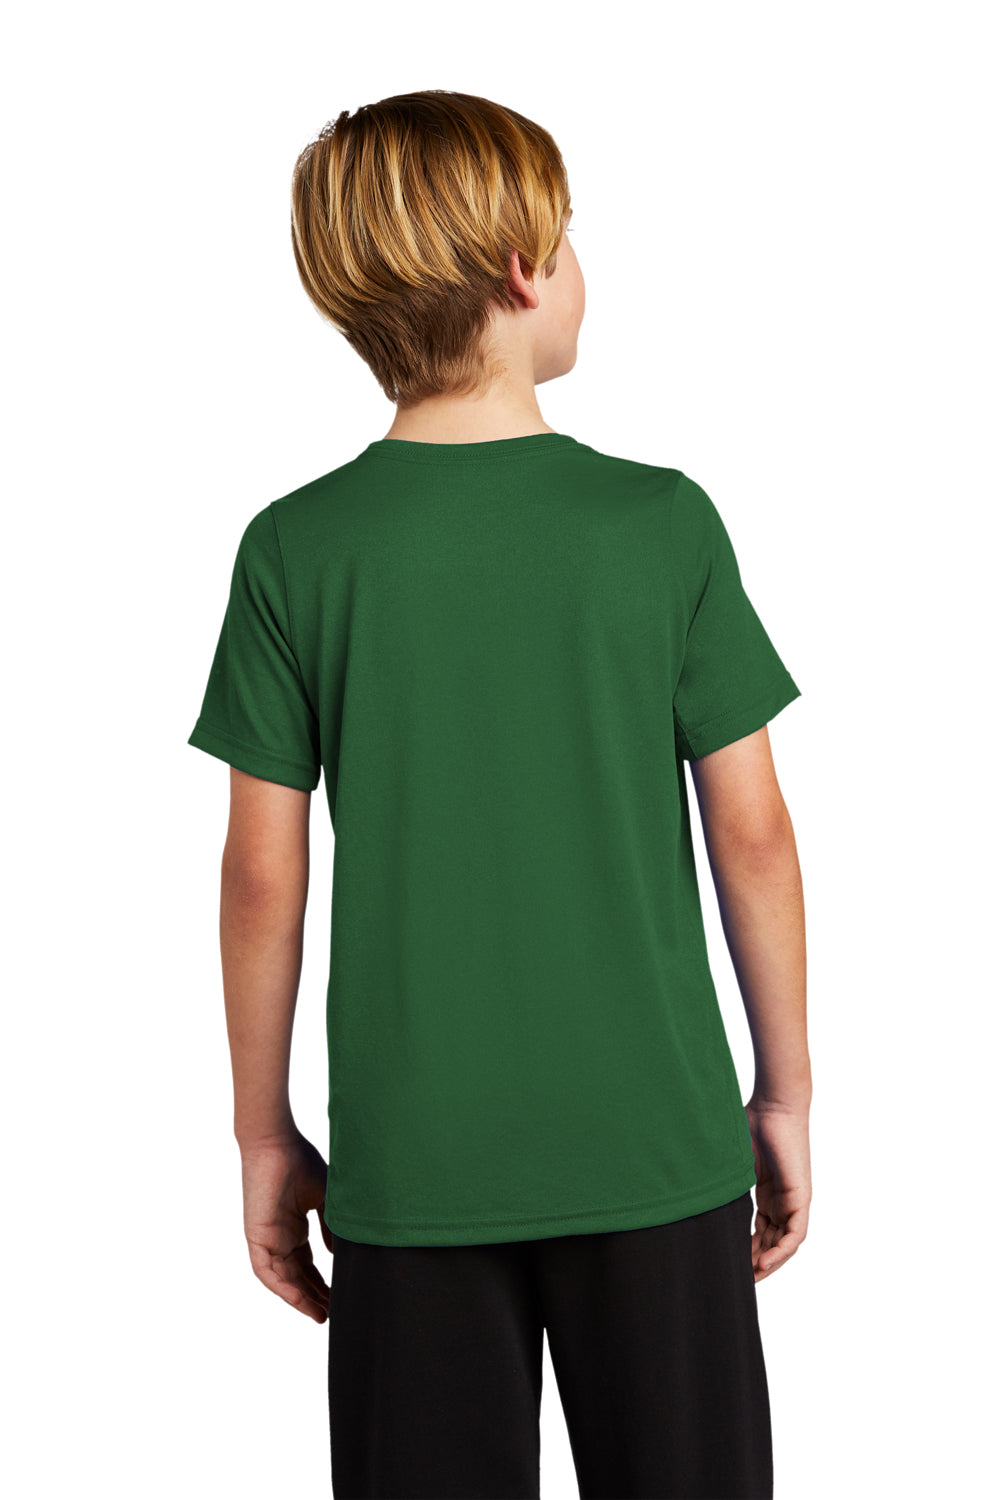 Nike 840178 Youth Legend Dri-Fit Moisture Wicking Short Sleeve Crewneck T-Shirt Gorge Green Model Back